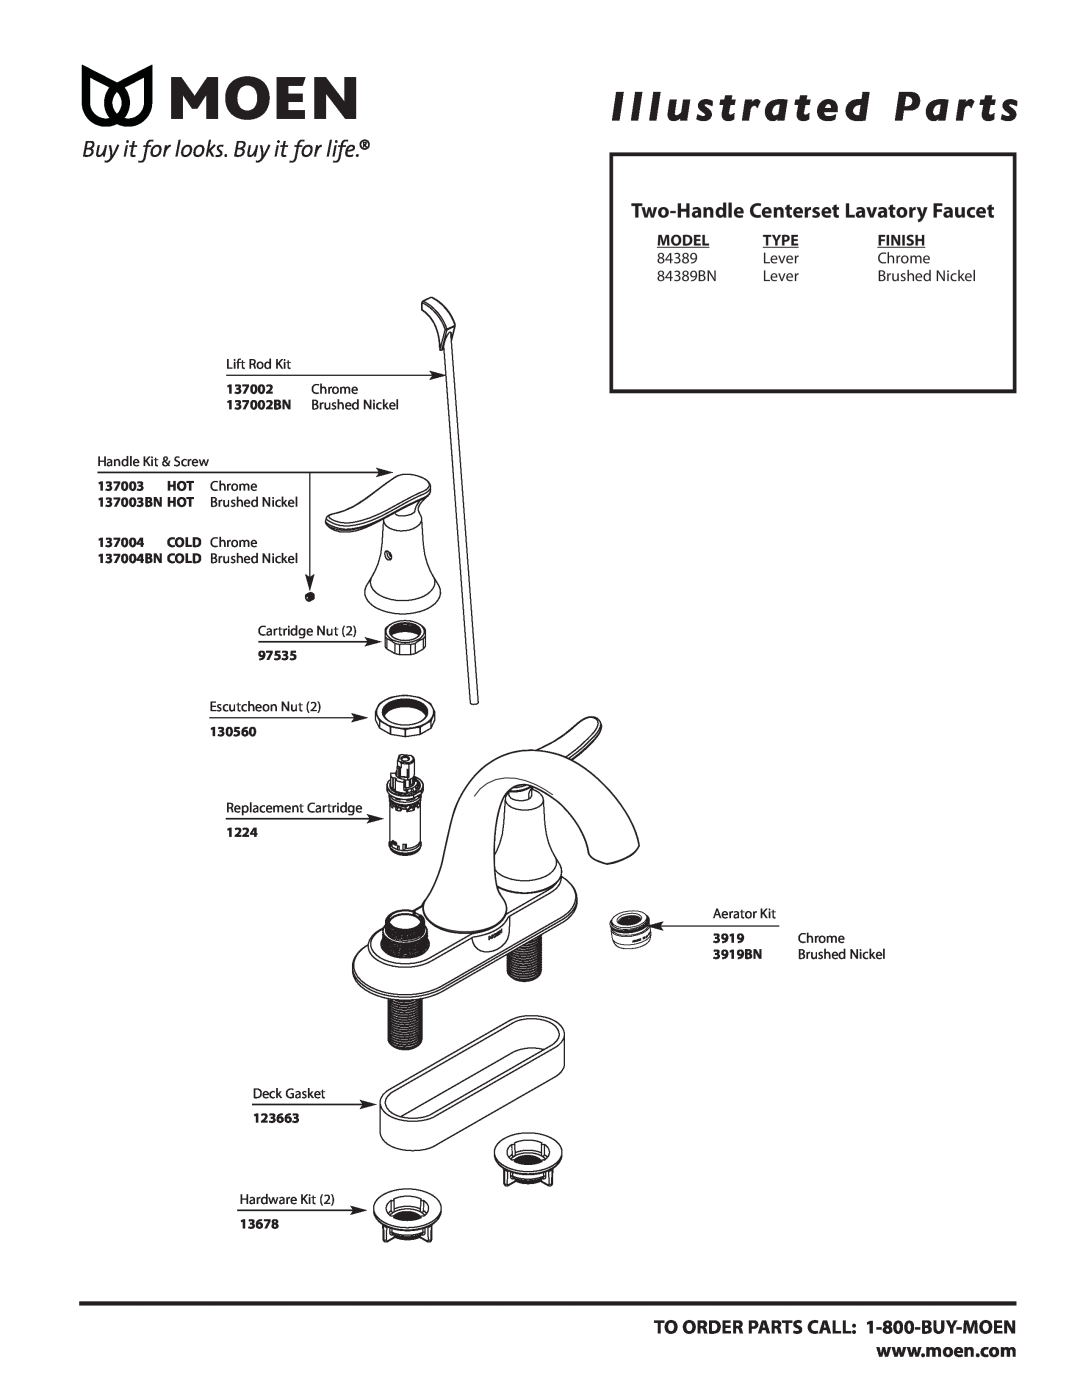 Moen manual Illustrated Par ts, Two-Handle Centerset Lavatory Faucet, Model, Type, Finish, Lever, Chrome, 84389BN 